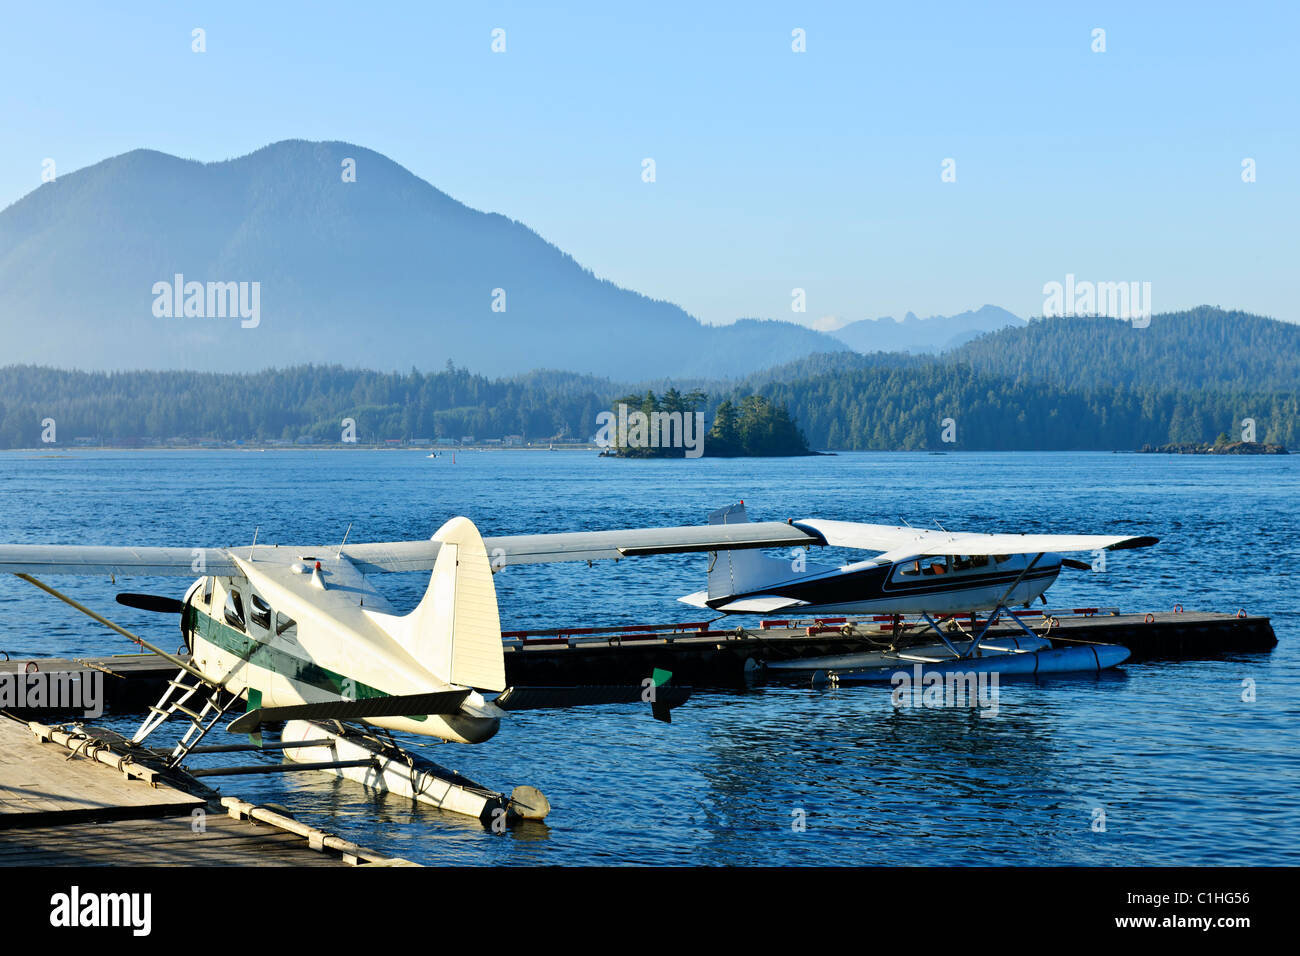 Seaplanes at dock in Tofino on Pacific coast of British Columbia, Canada Stock Photo